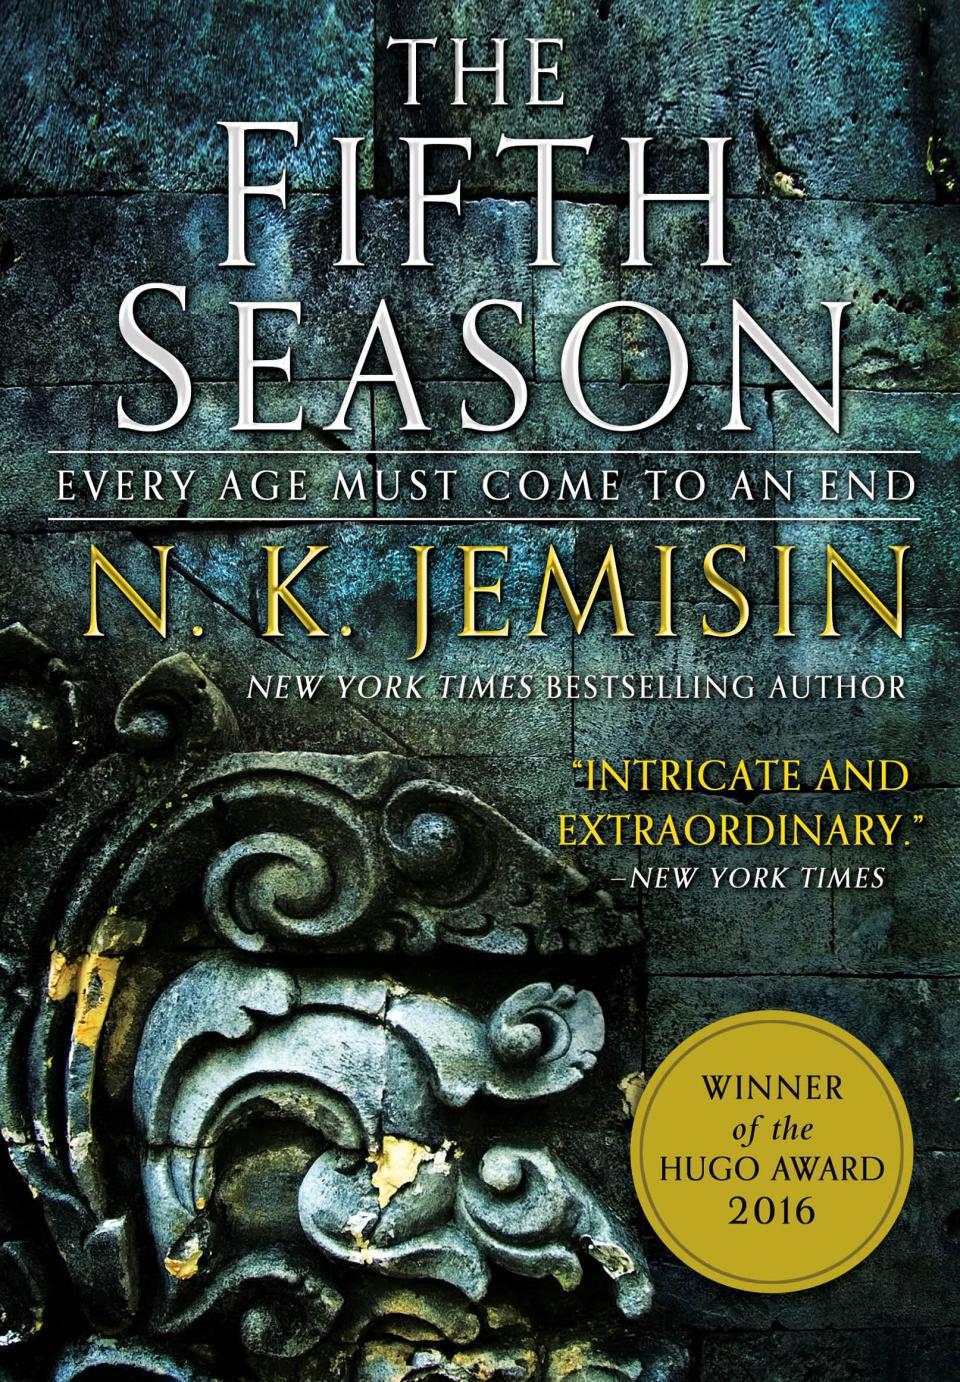 "The Fifth Season" by N.K. Jemisin